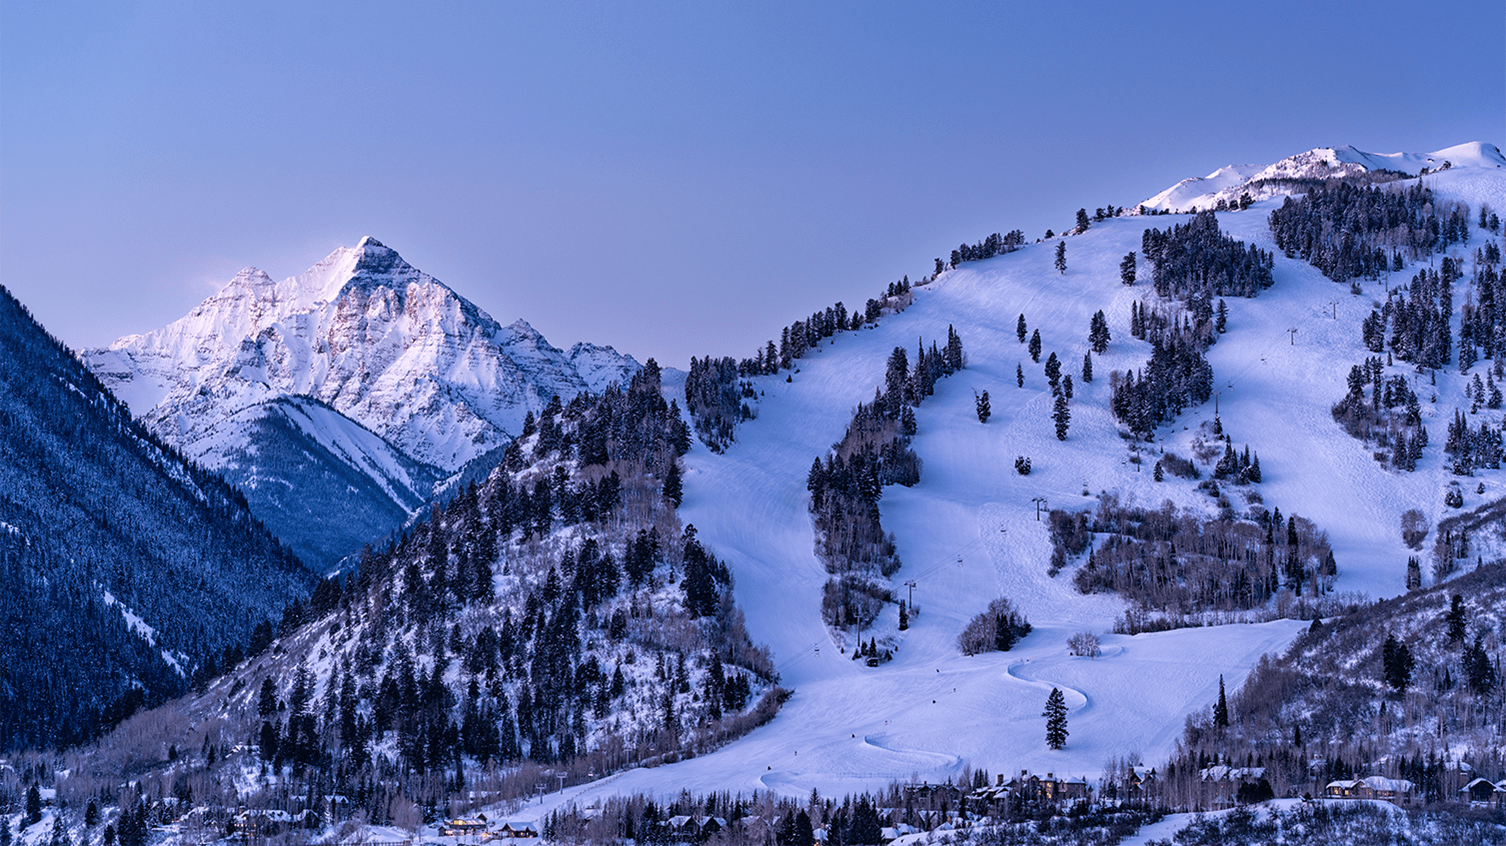 Aspen Mountain (ski area) - Wikipedia